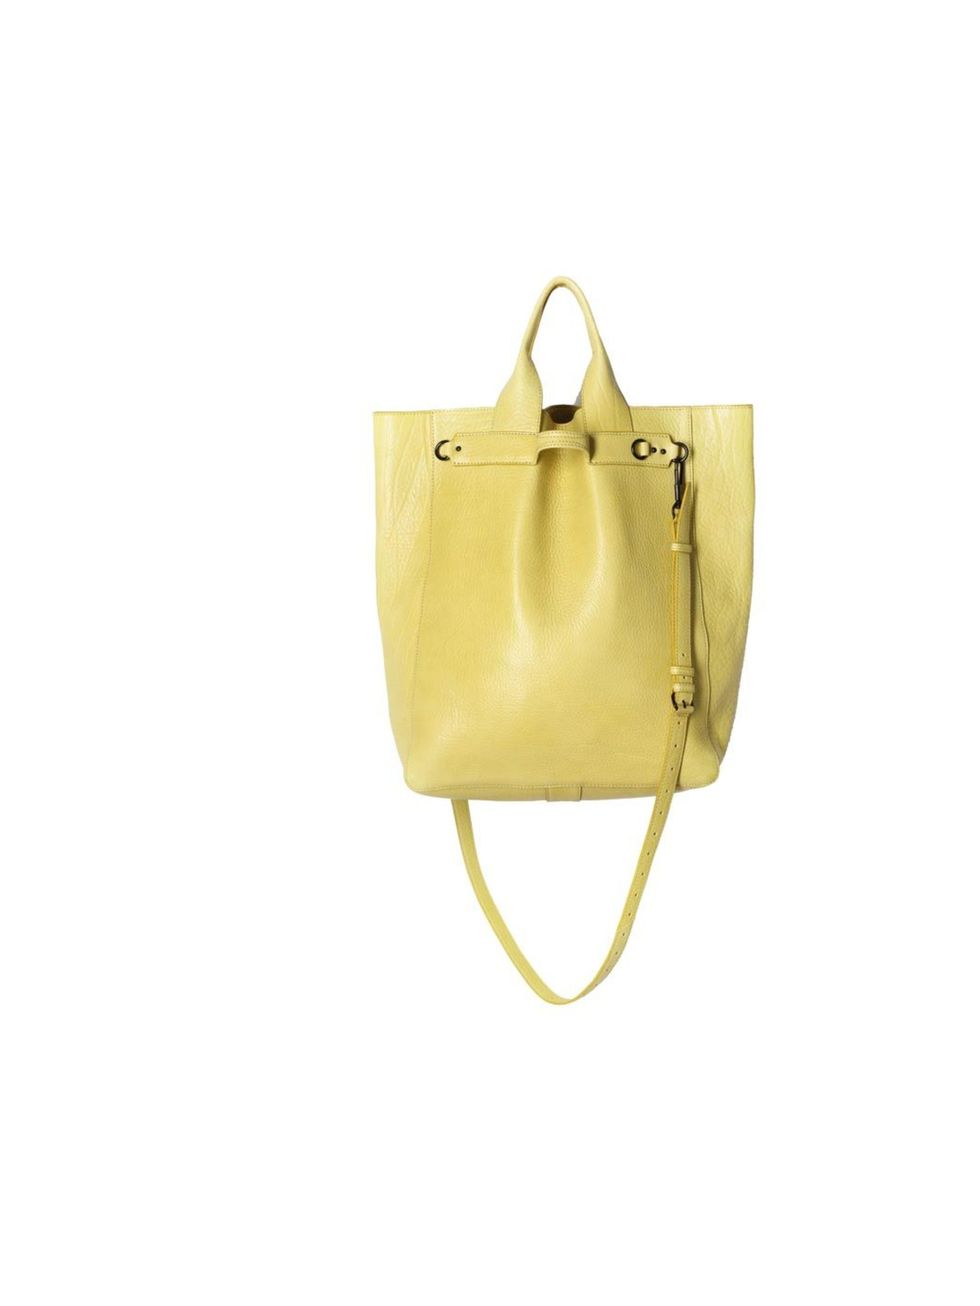 <p>3.1 Phillip Lim shopper 'Lark' tote bag in lemon, £579, at <a href="http://www.farfetch.com/shopping/women/31-phillip-lim-lark-tote-item-10184583.aspx">Farfetch</a></p>